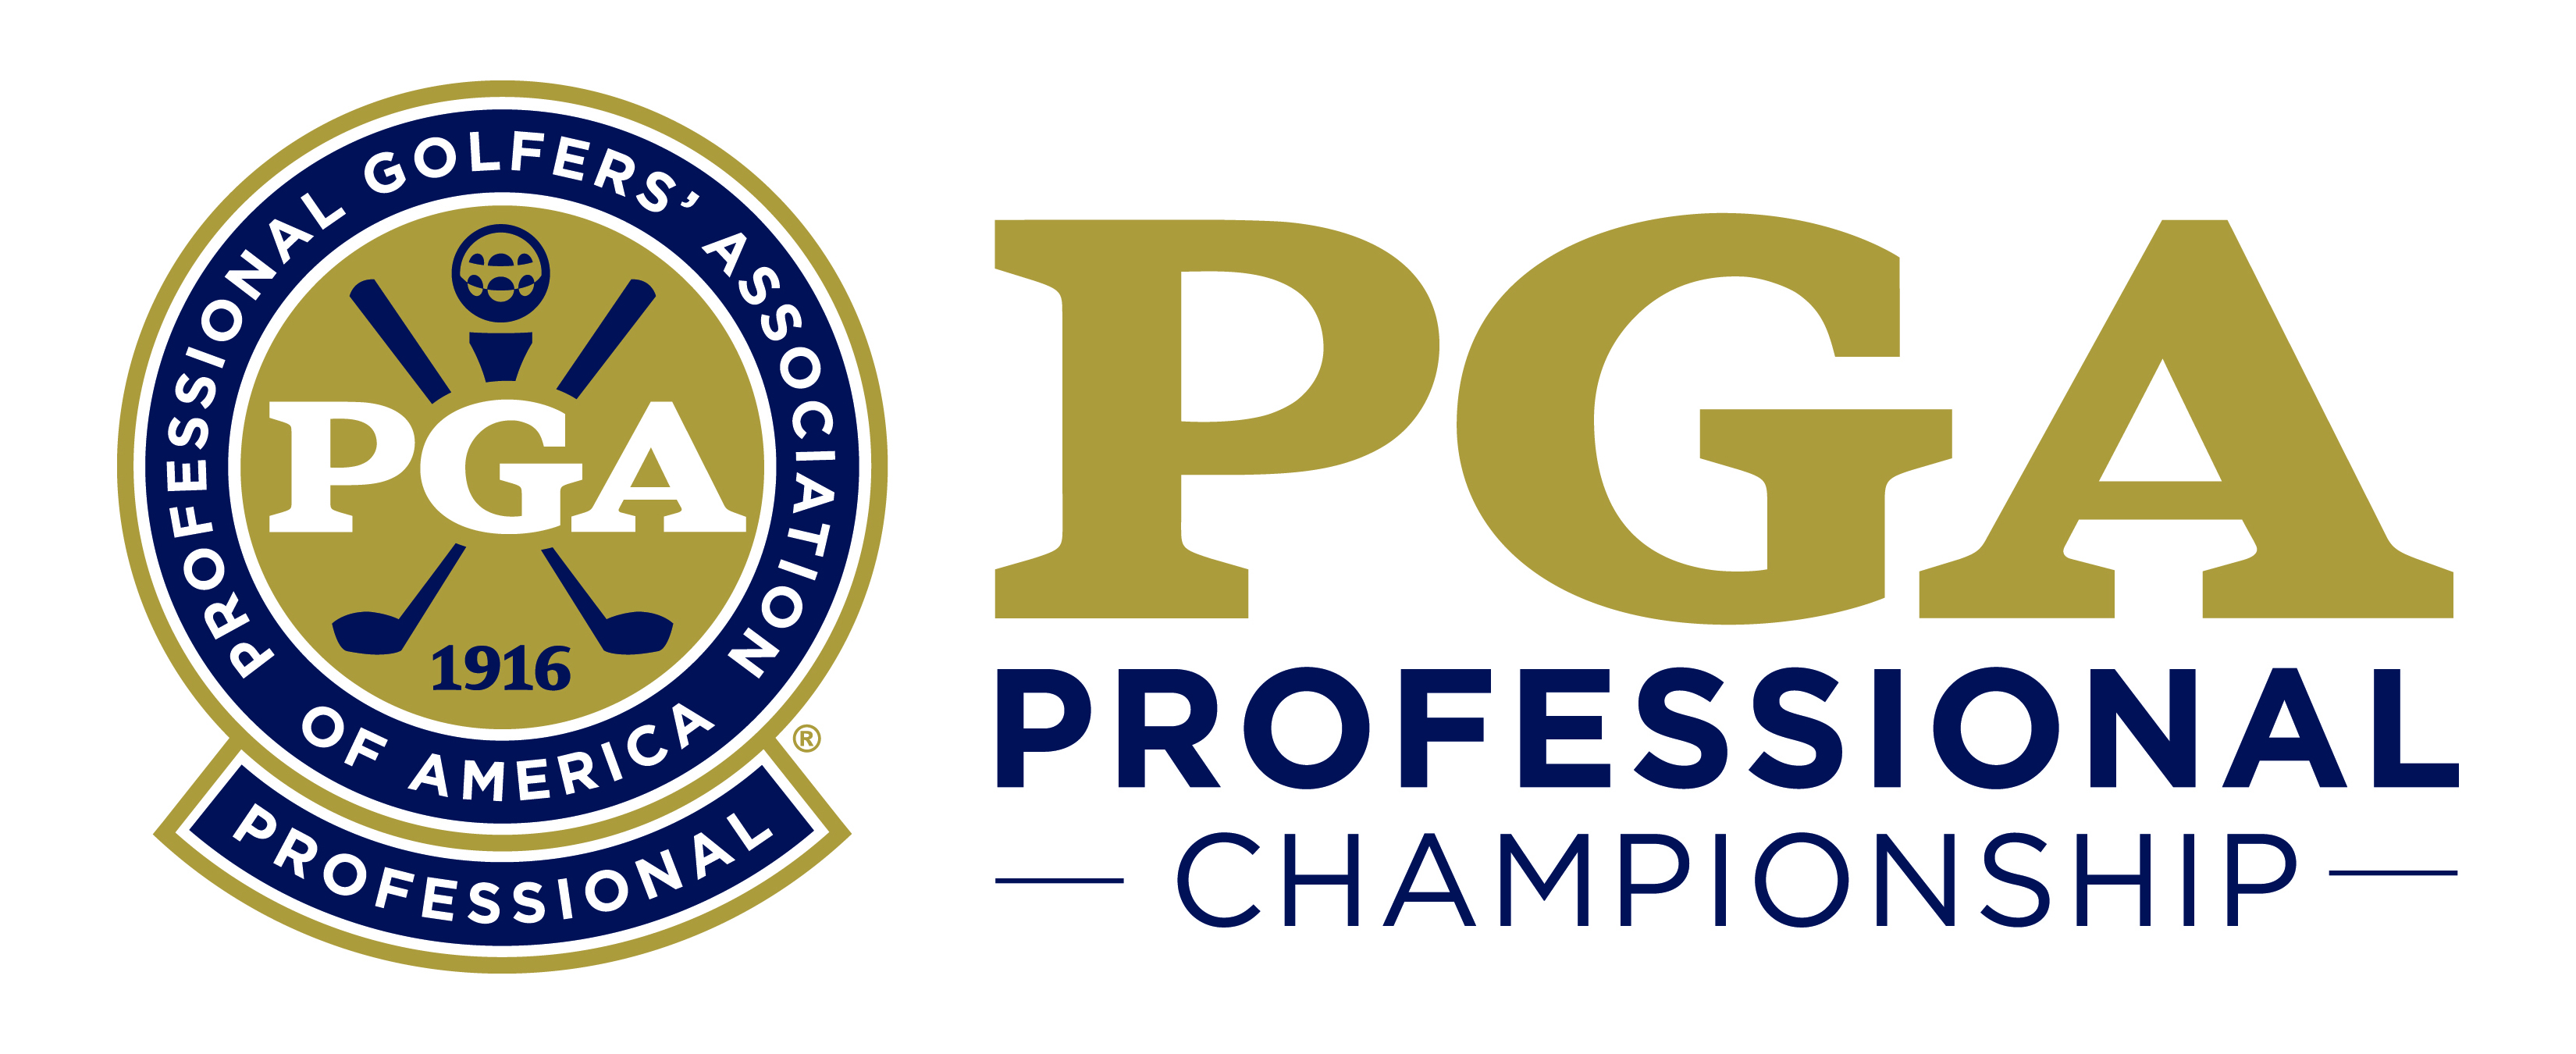 PGA Professional Championship